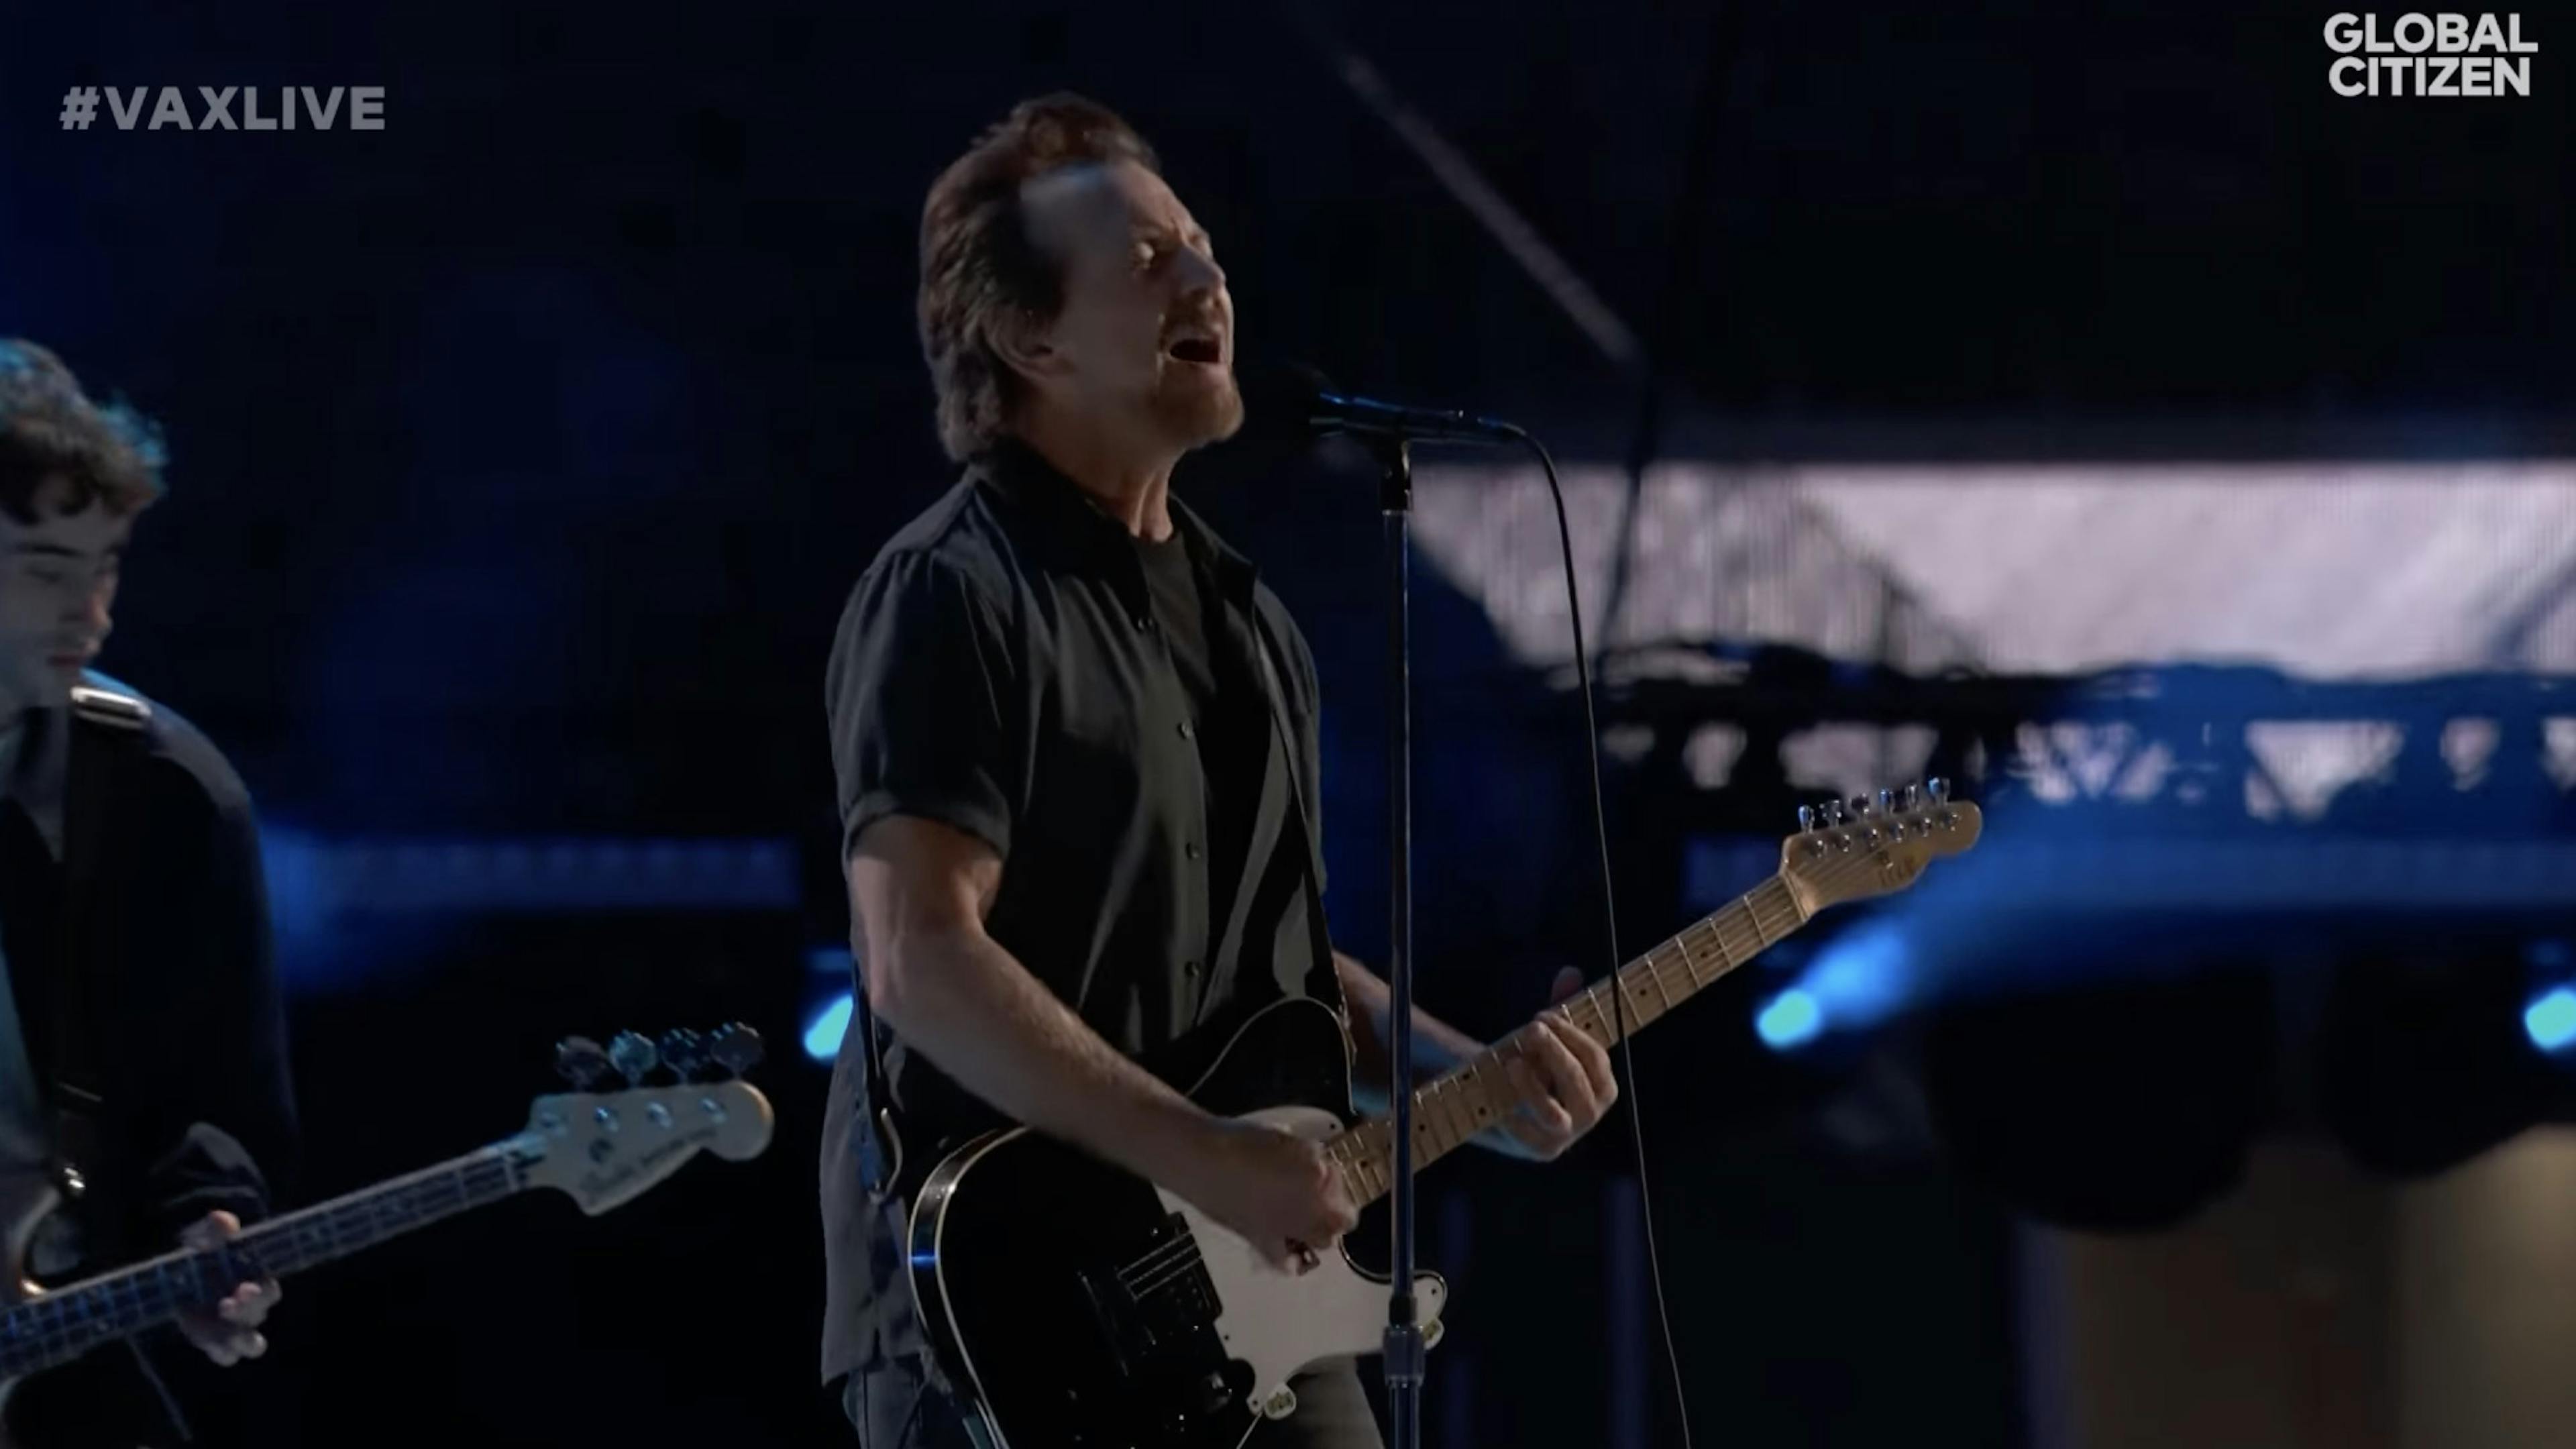 Watch Eddie Vedder's high-energy performance of Pearl Jam's Corduroy at VAX LIVE